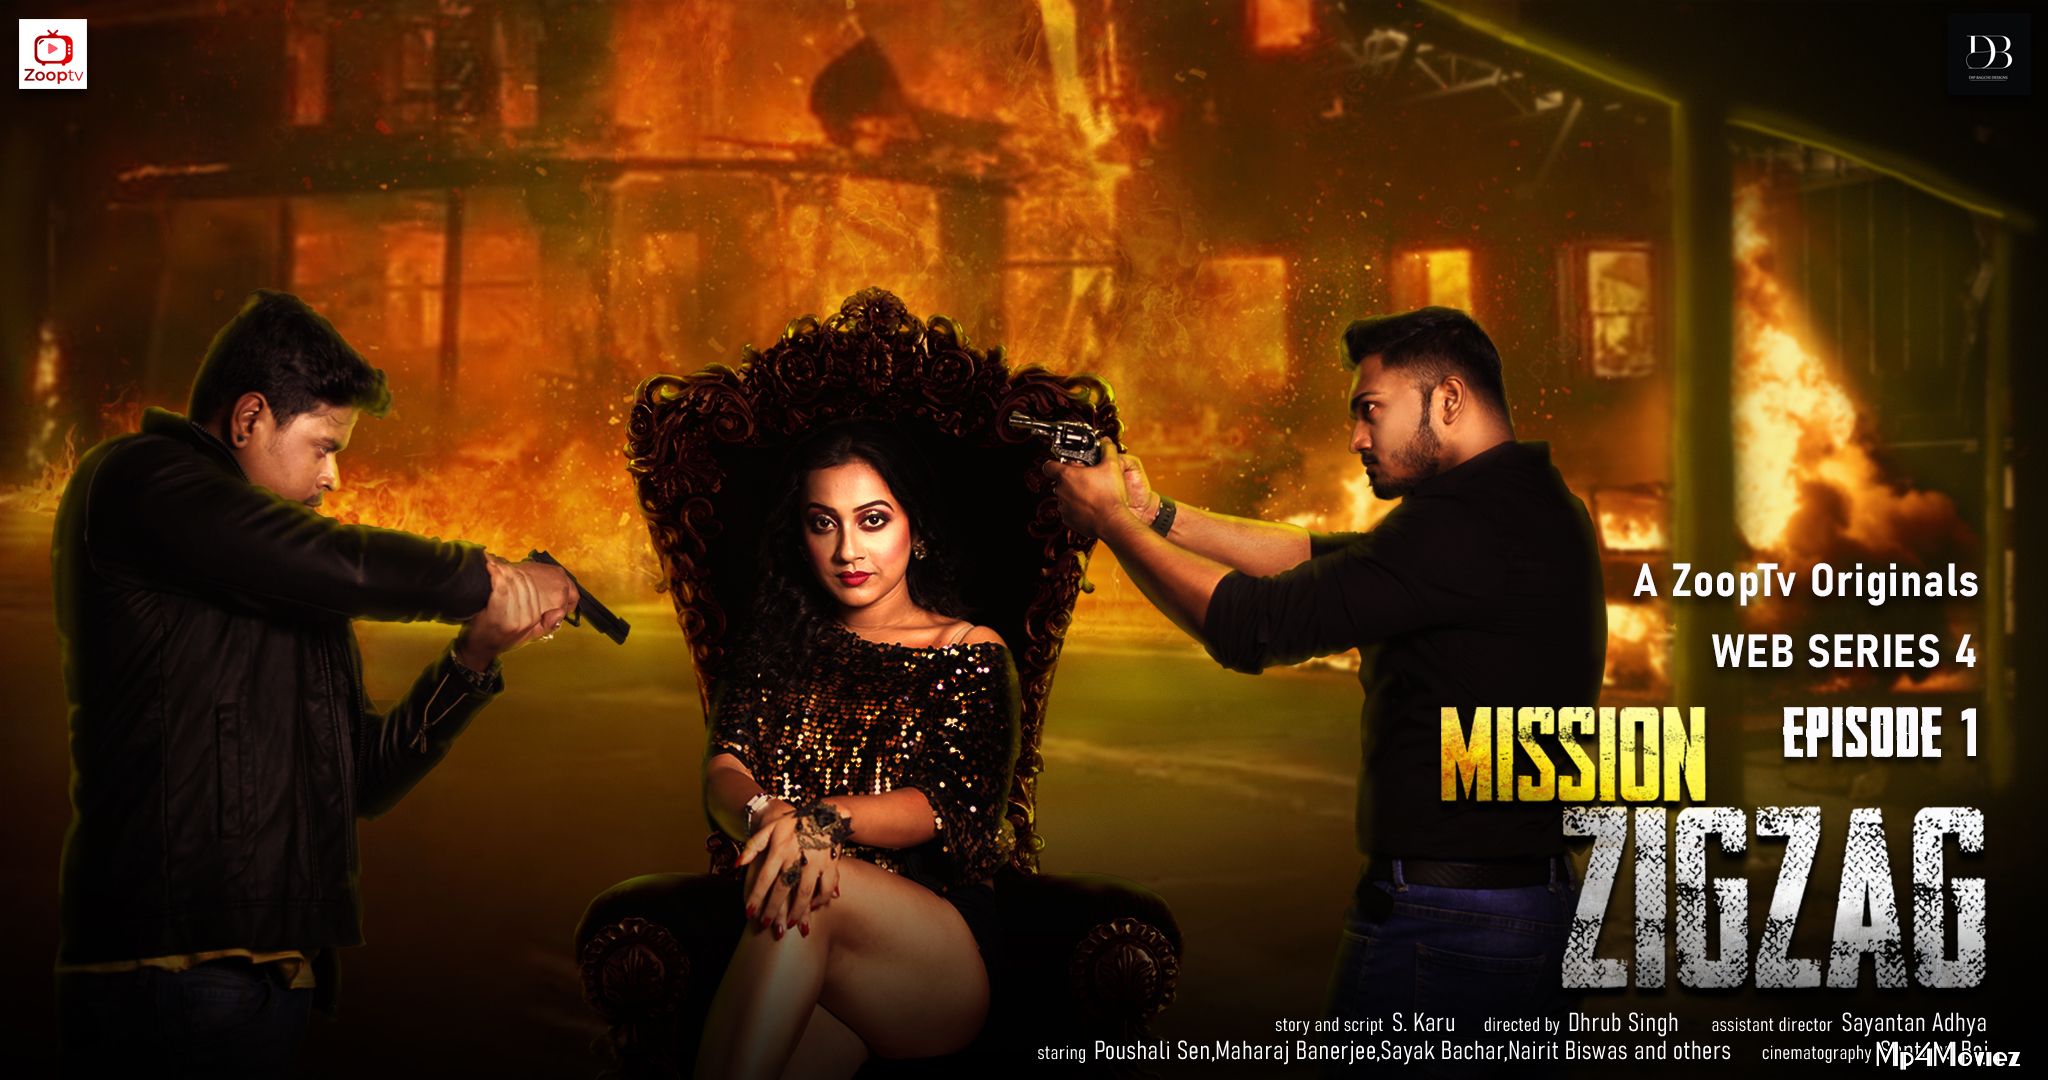 Mission Zigzag Part 1 (2021) Hindi Short Film HDRip download full movie